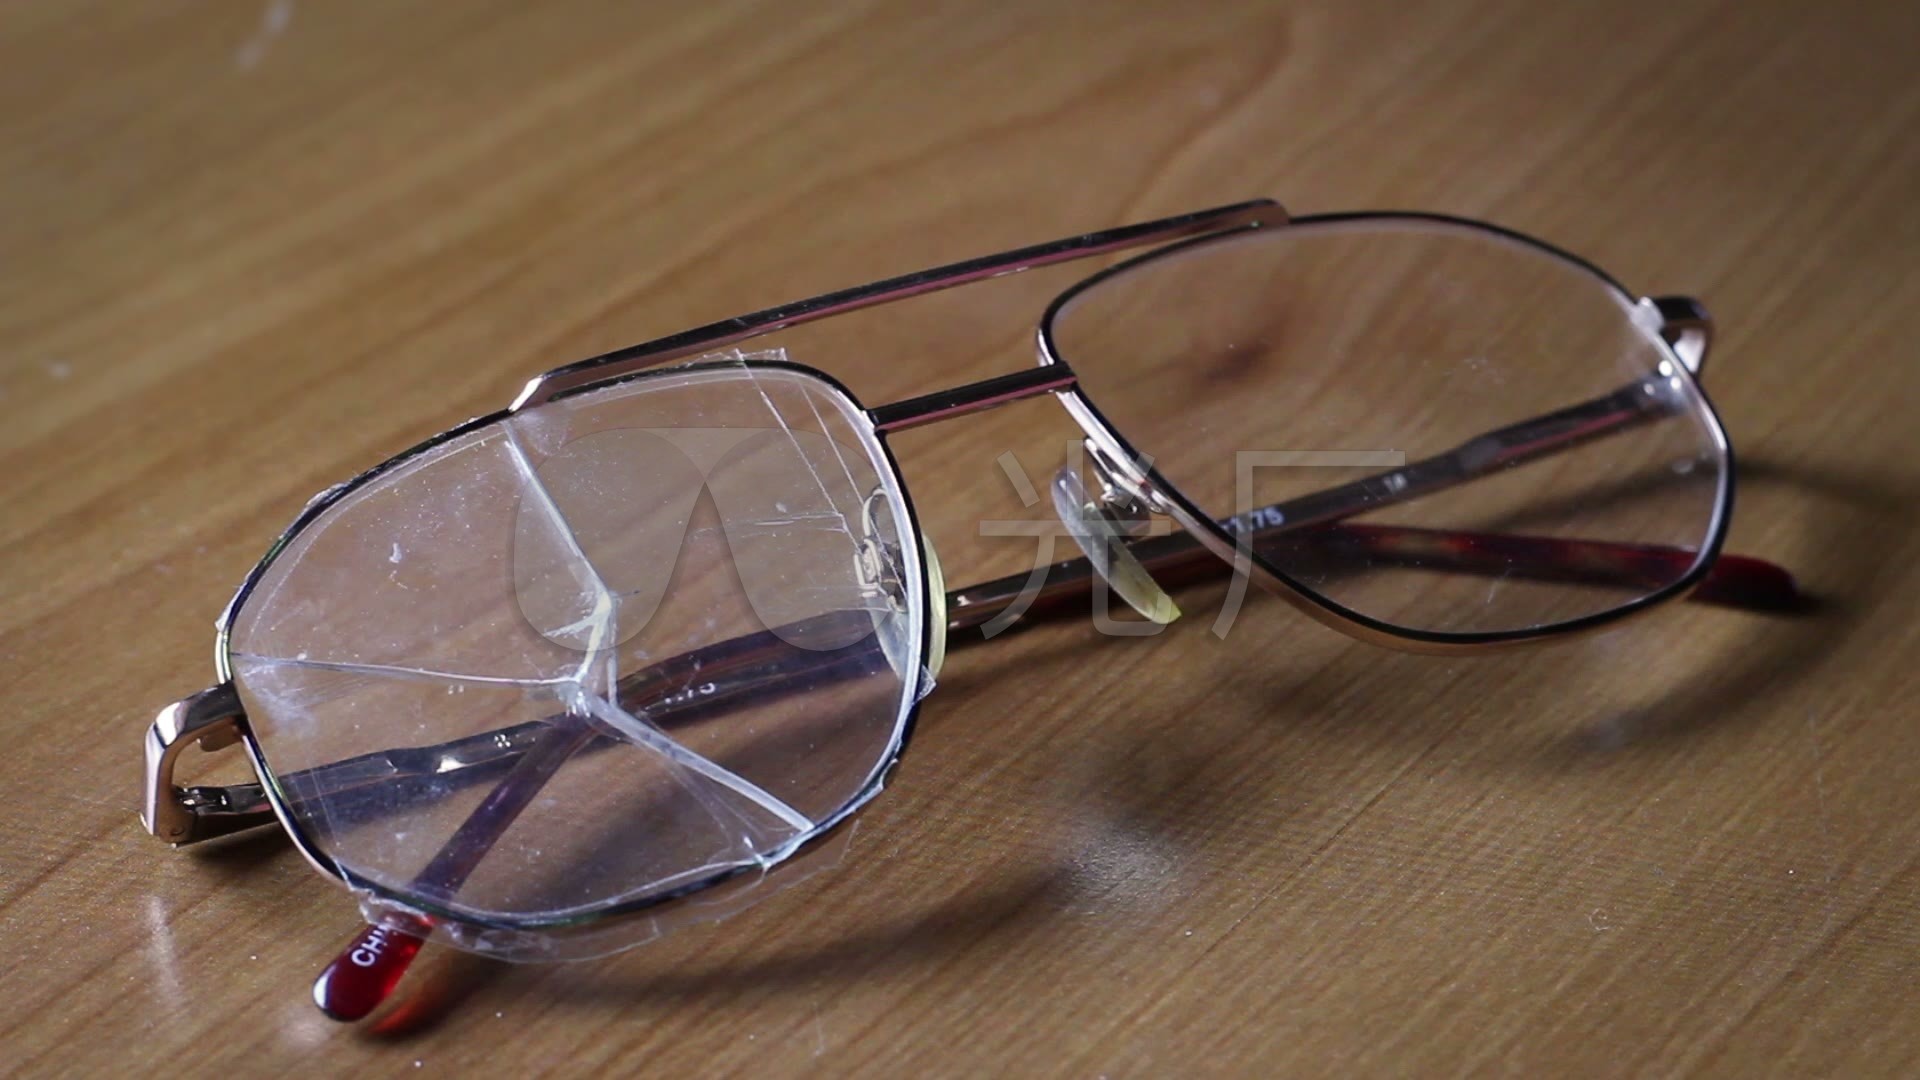 Free Images : sunglasses, glasses, eyewear, broken glass, glass ...